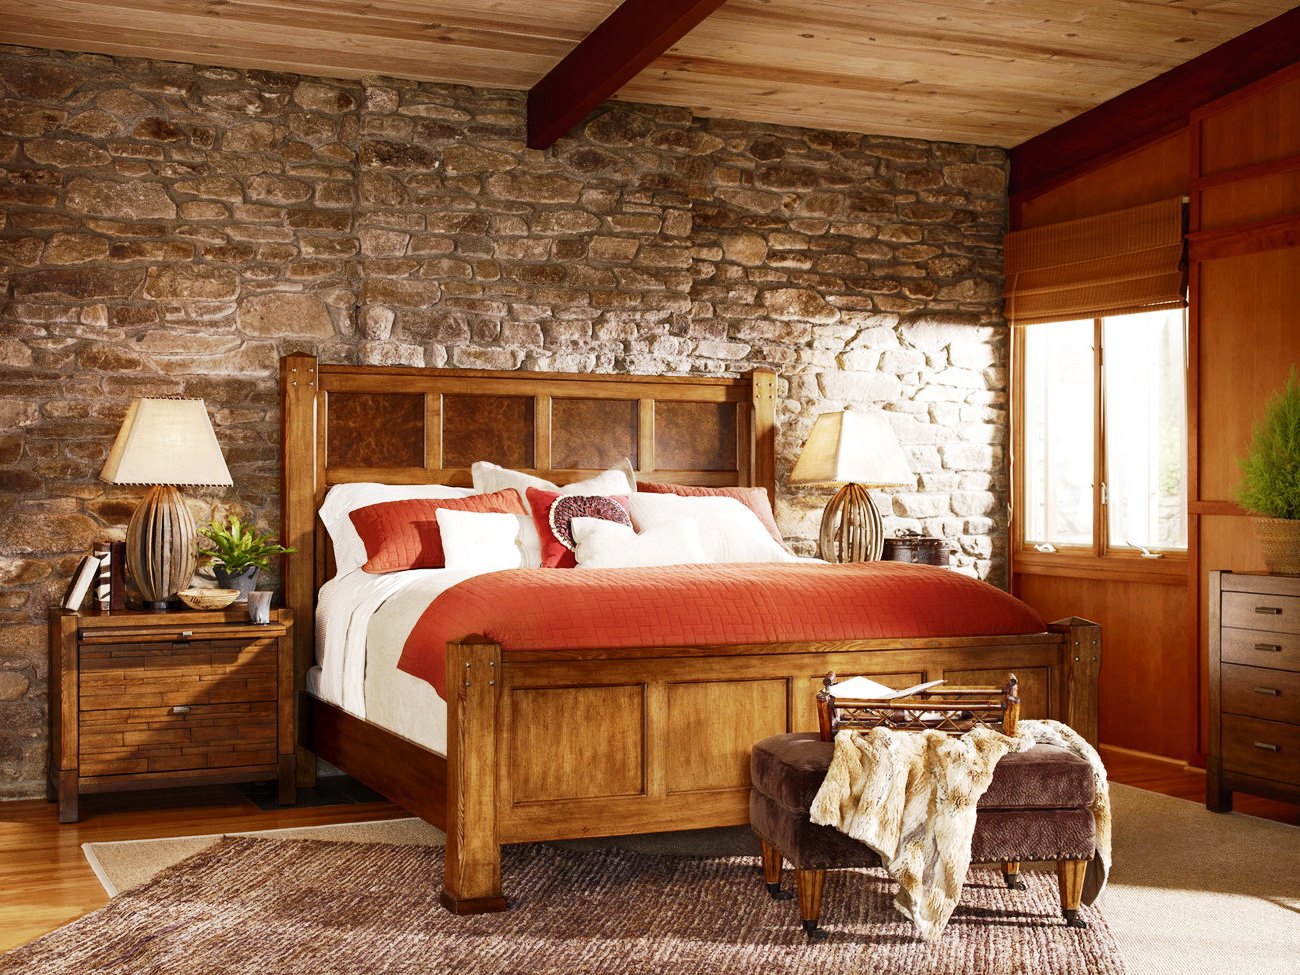 7-Rustic Bedroom Ideas